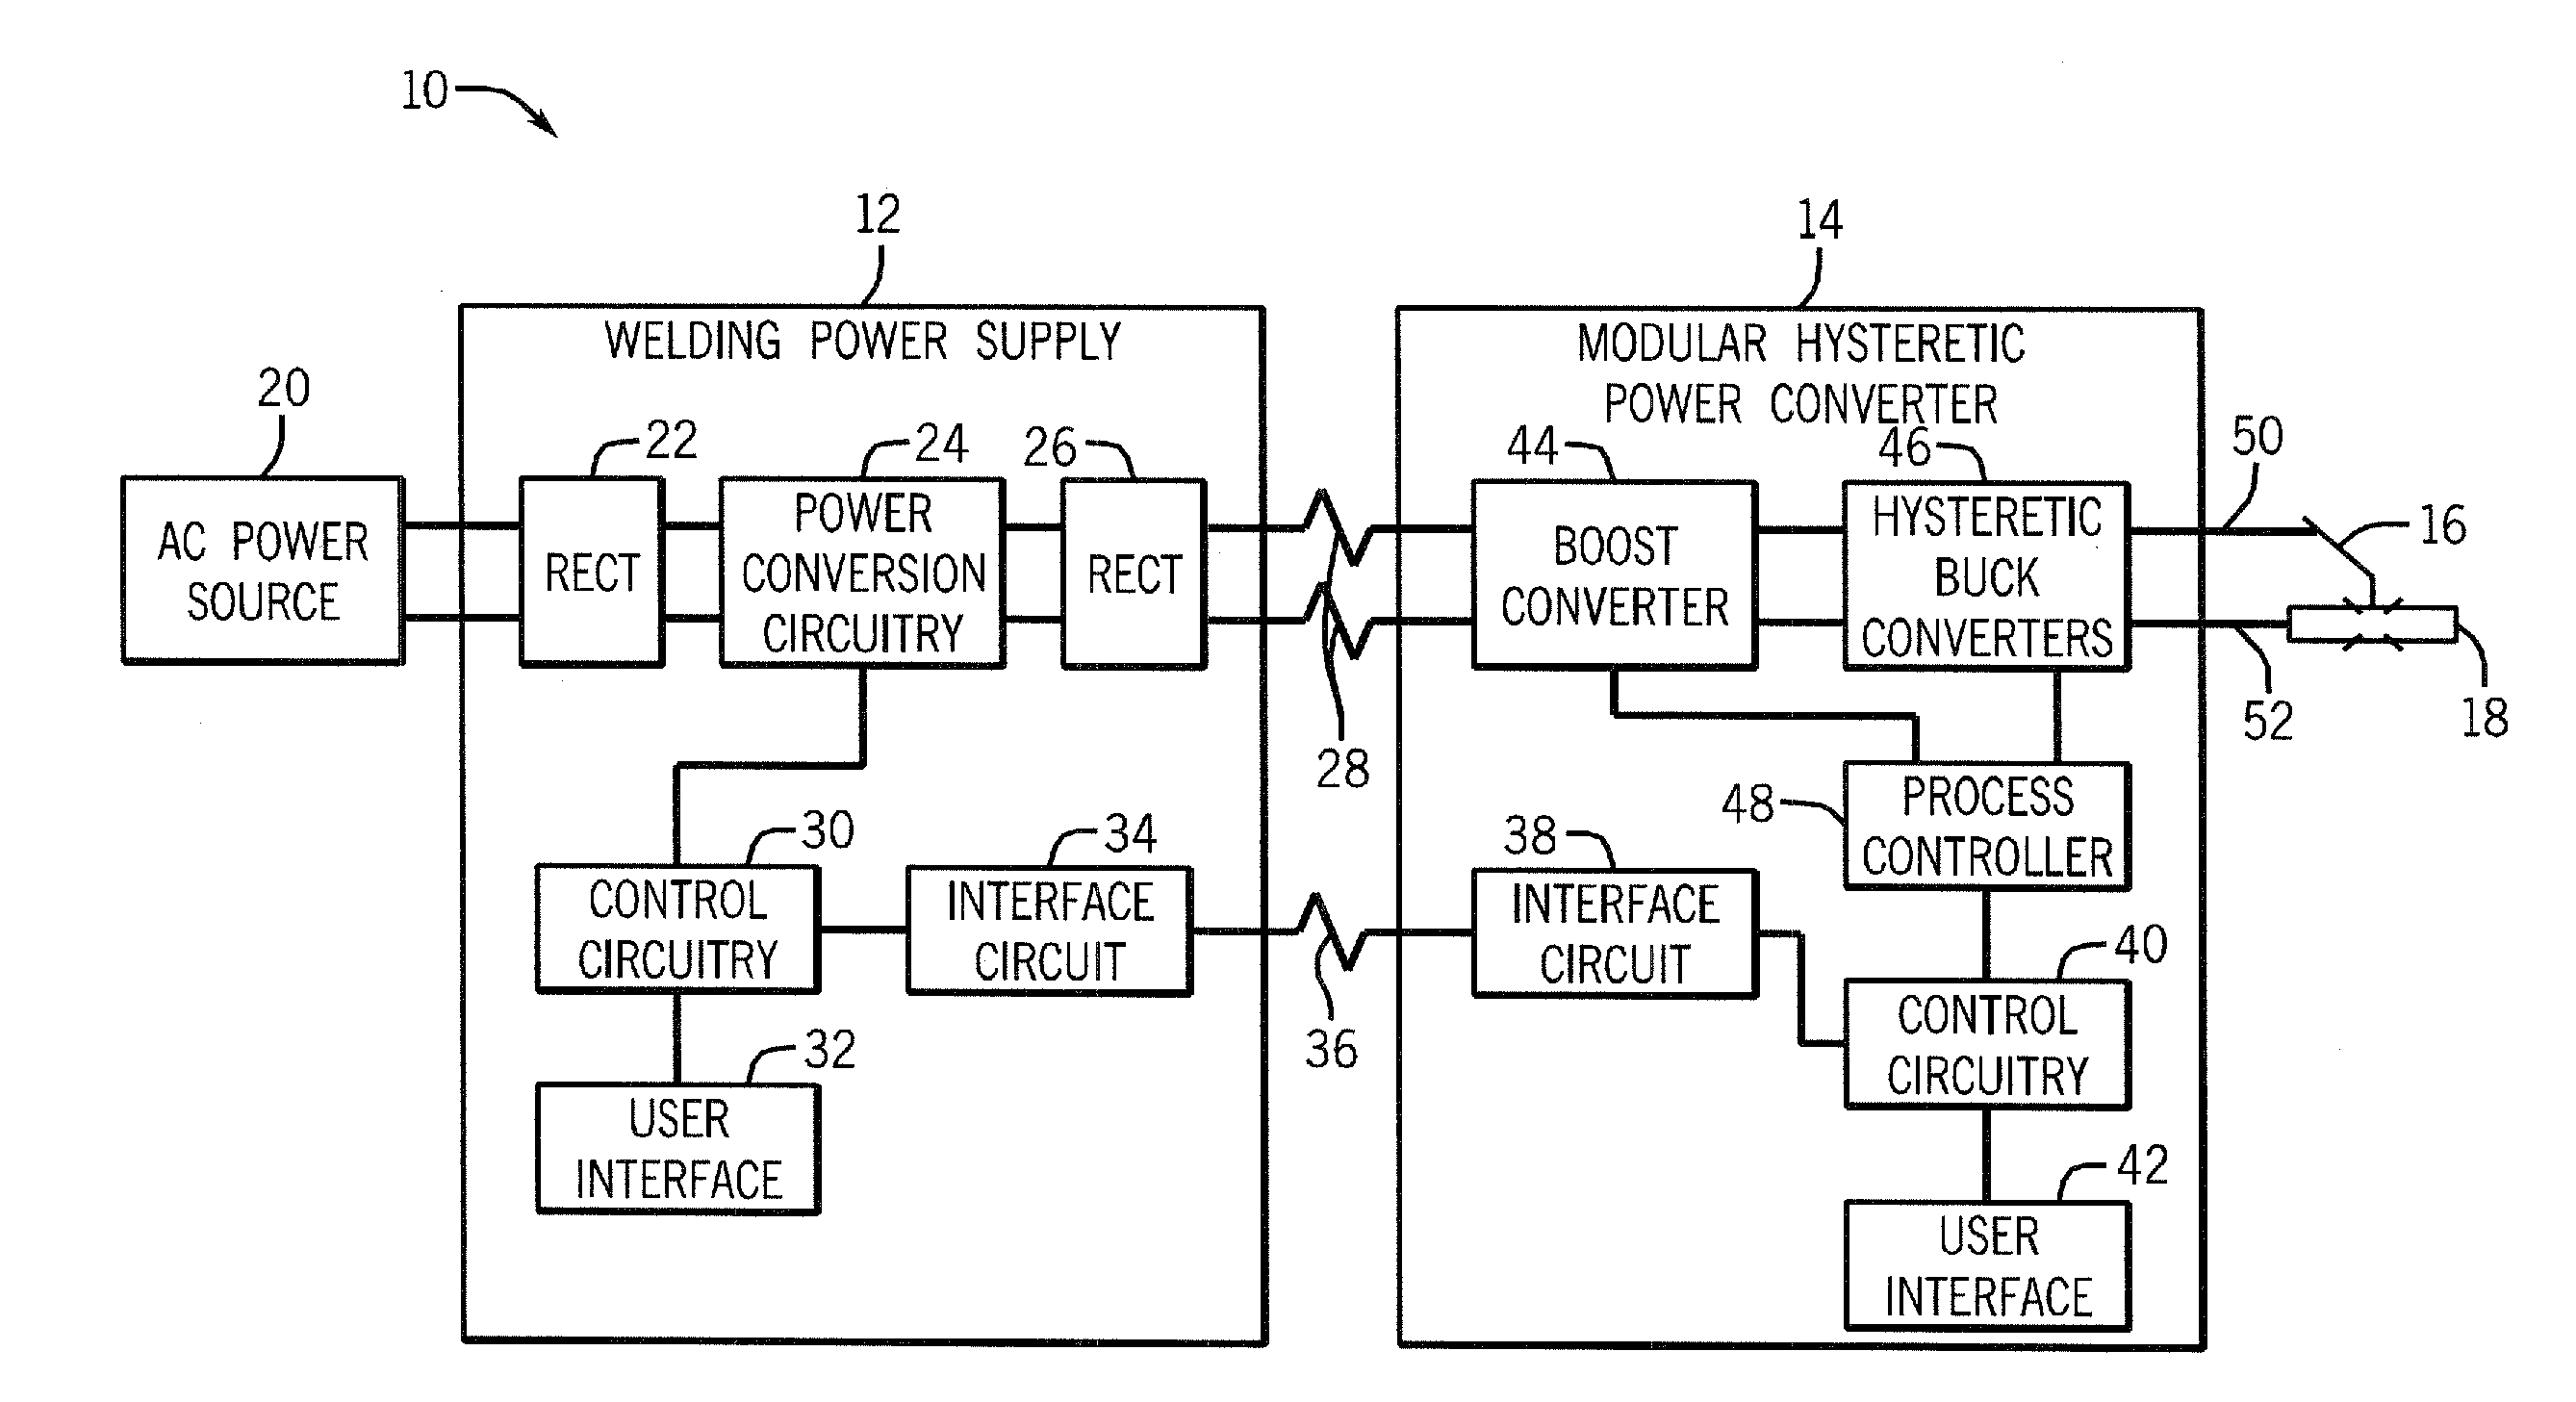 Modular direct current power source